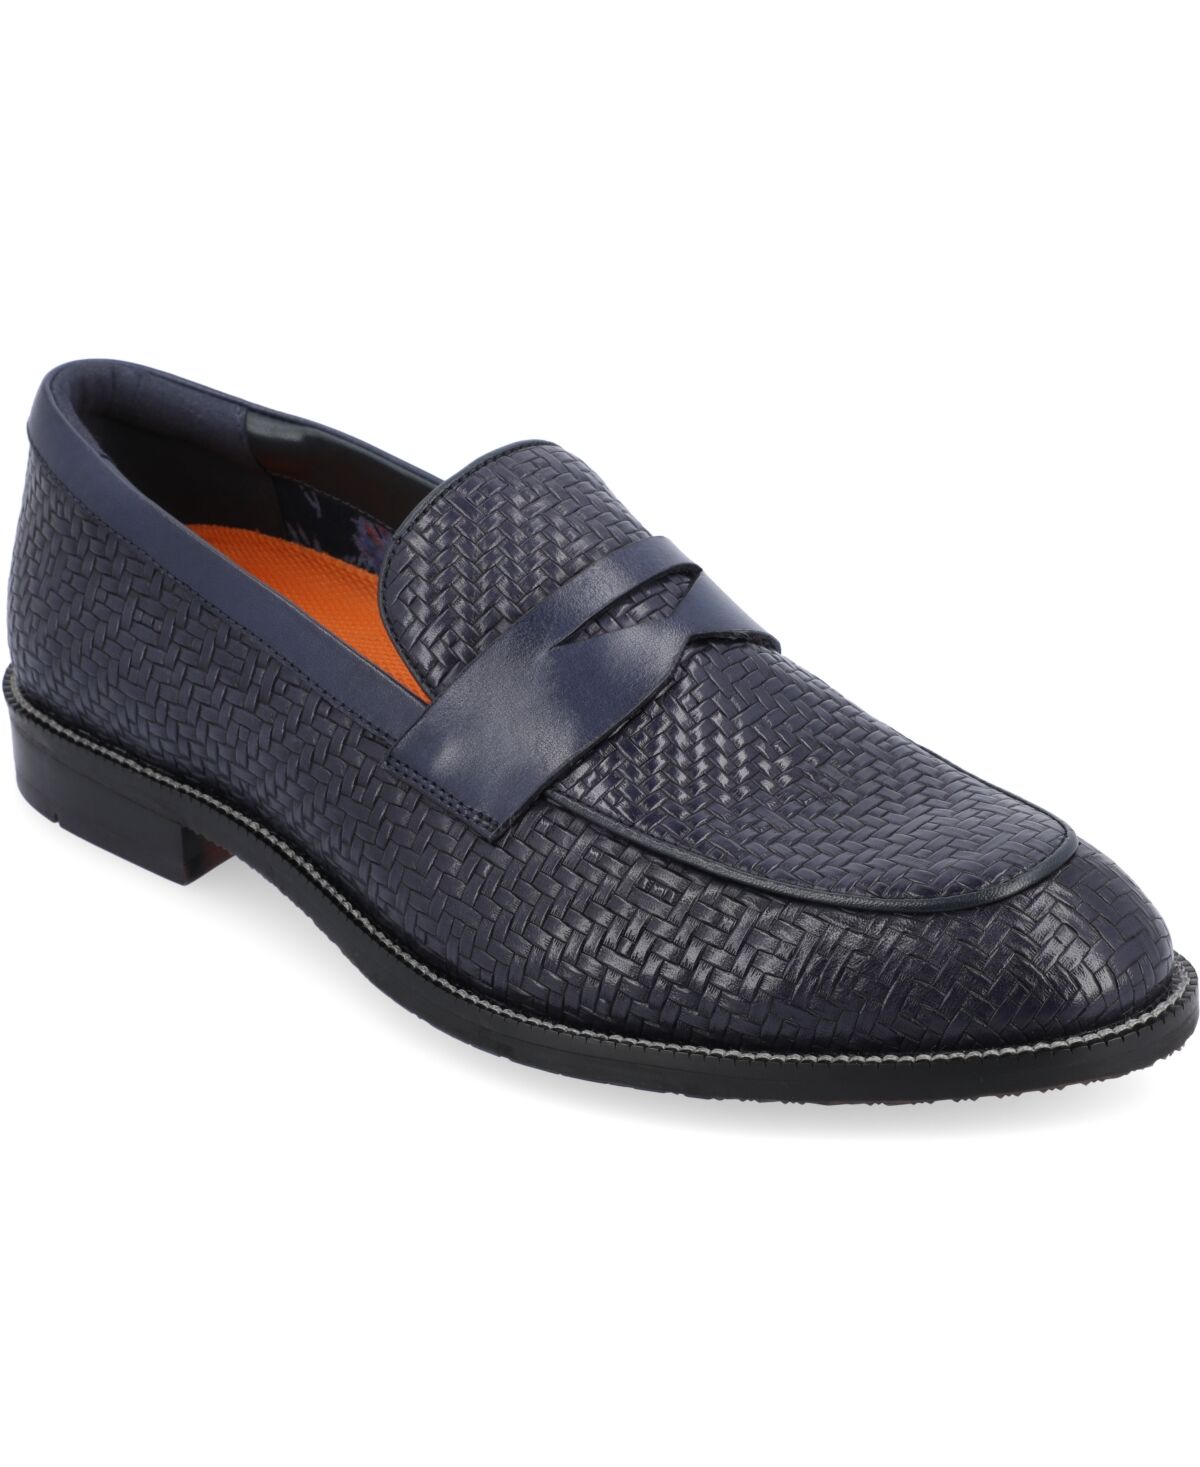 Thomas & Vine Men's Barlow Apron Toe Penny Loafers Dress Shoes - Navy